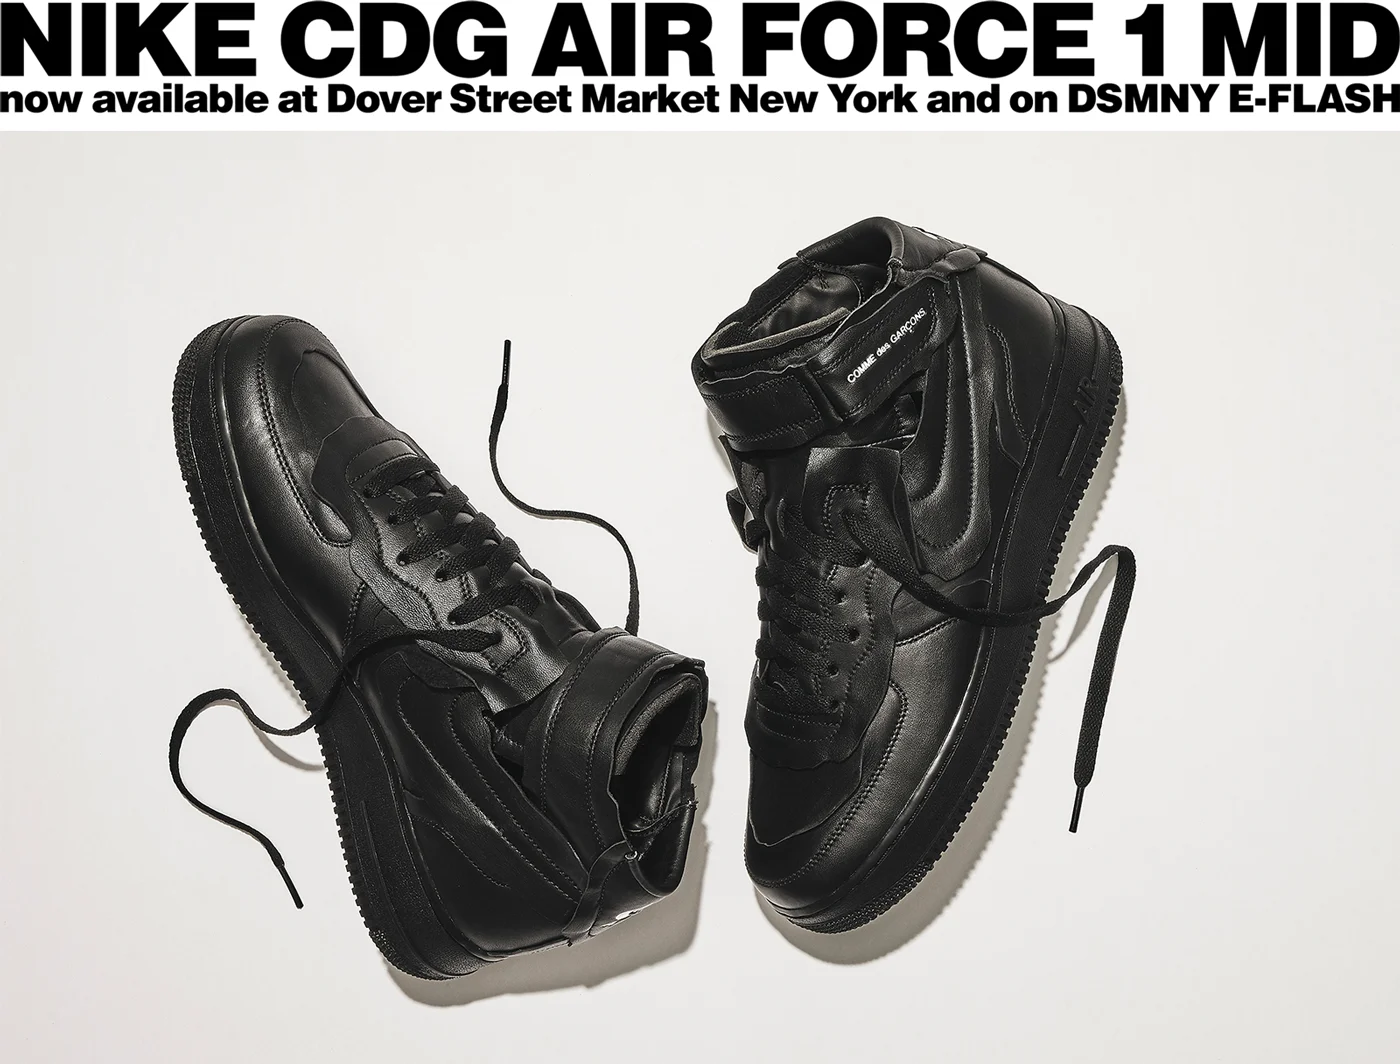 air force 1 dsm nyc